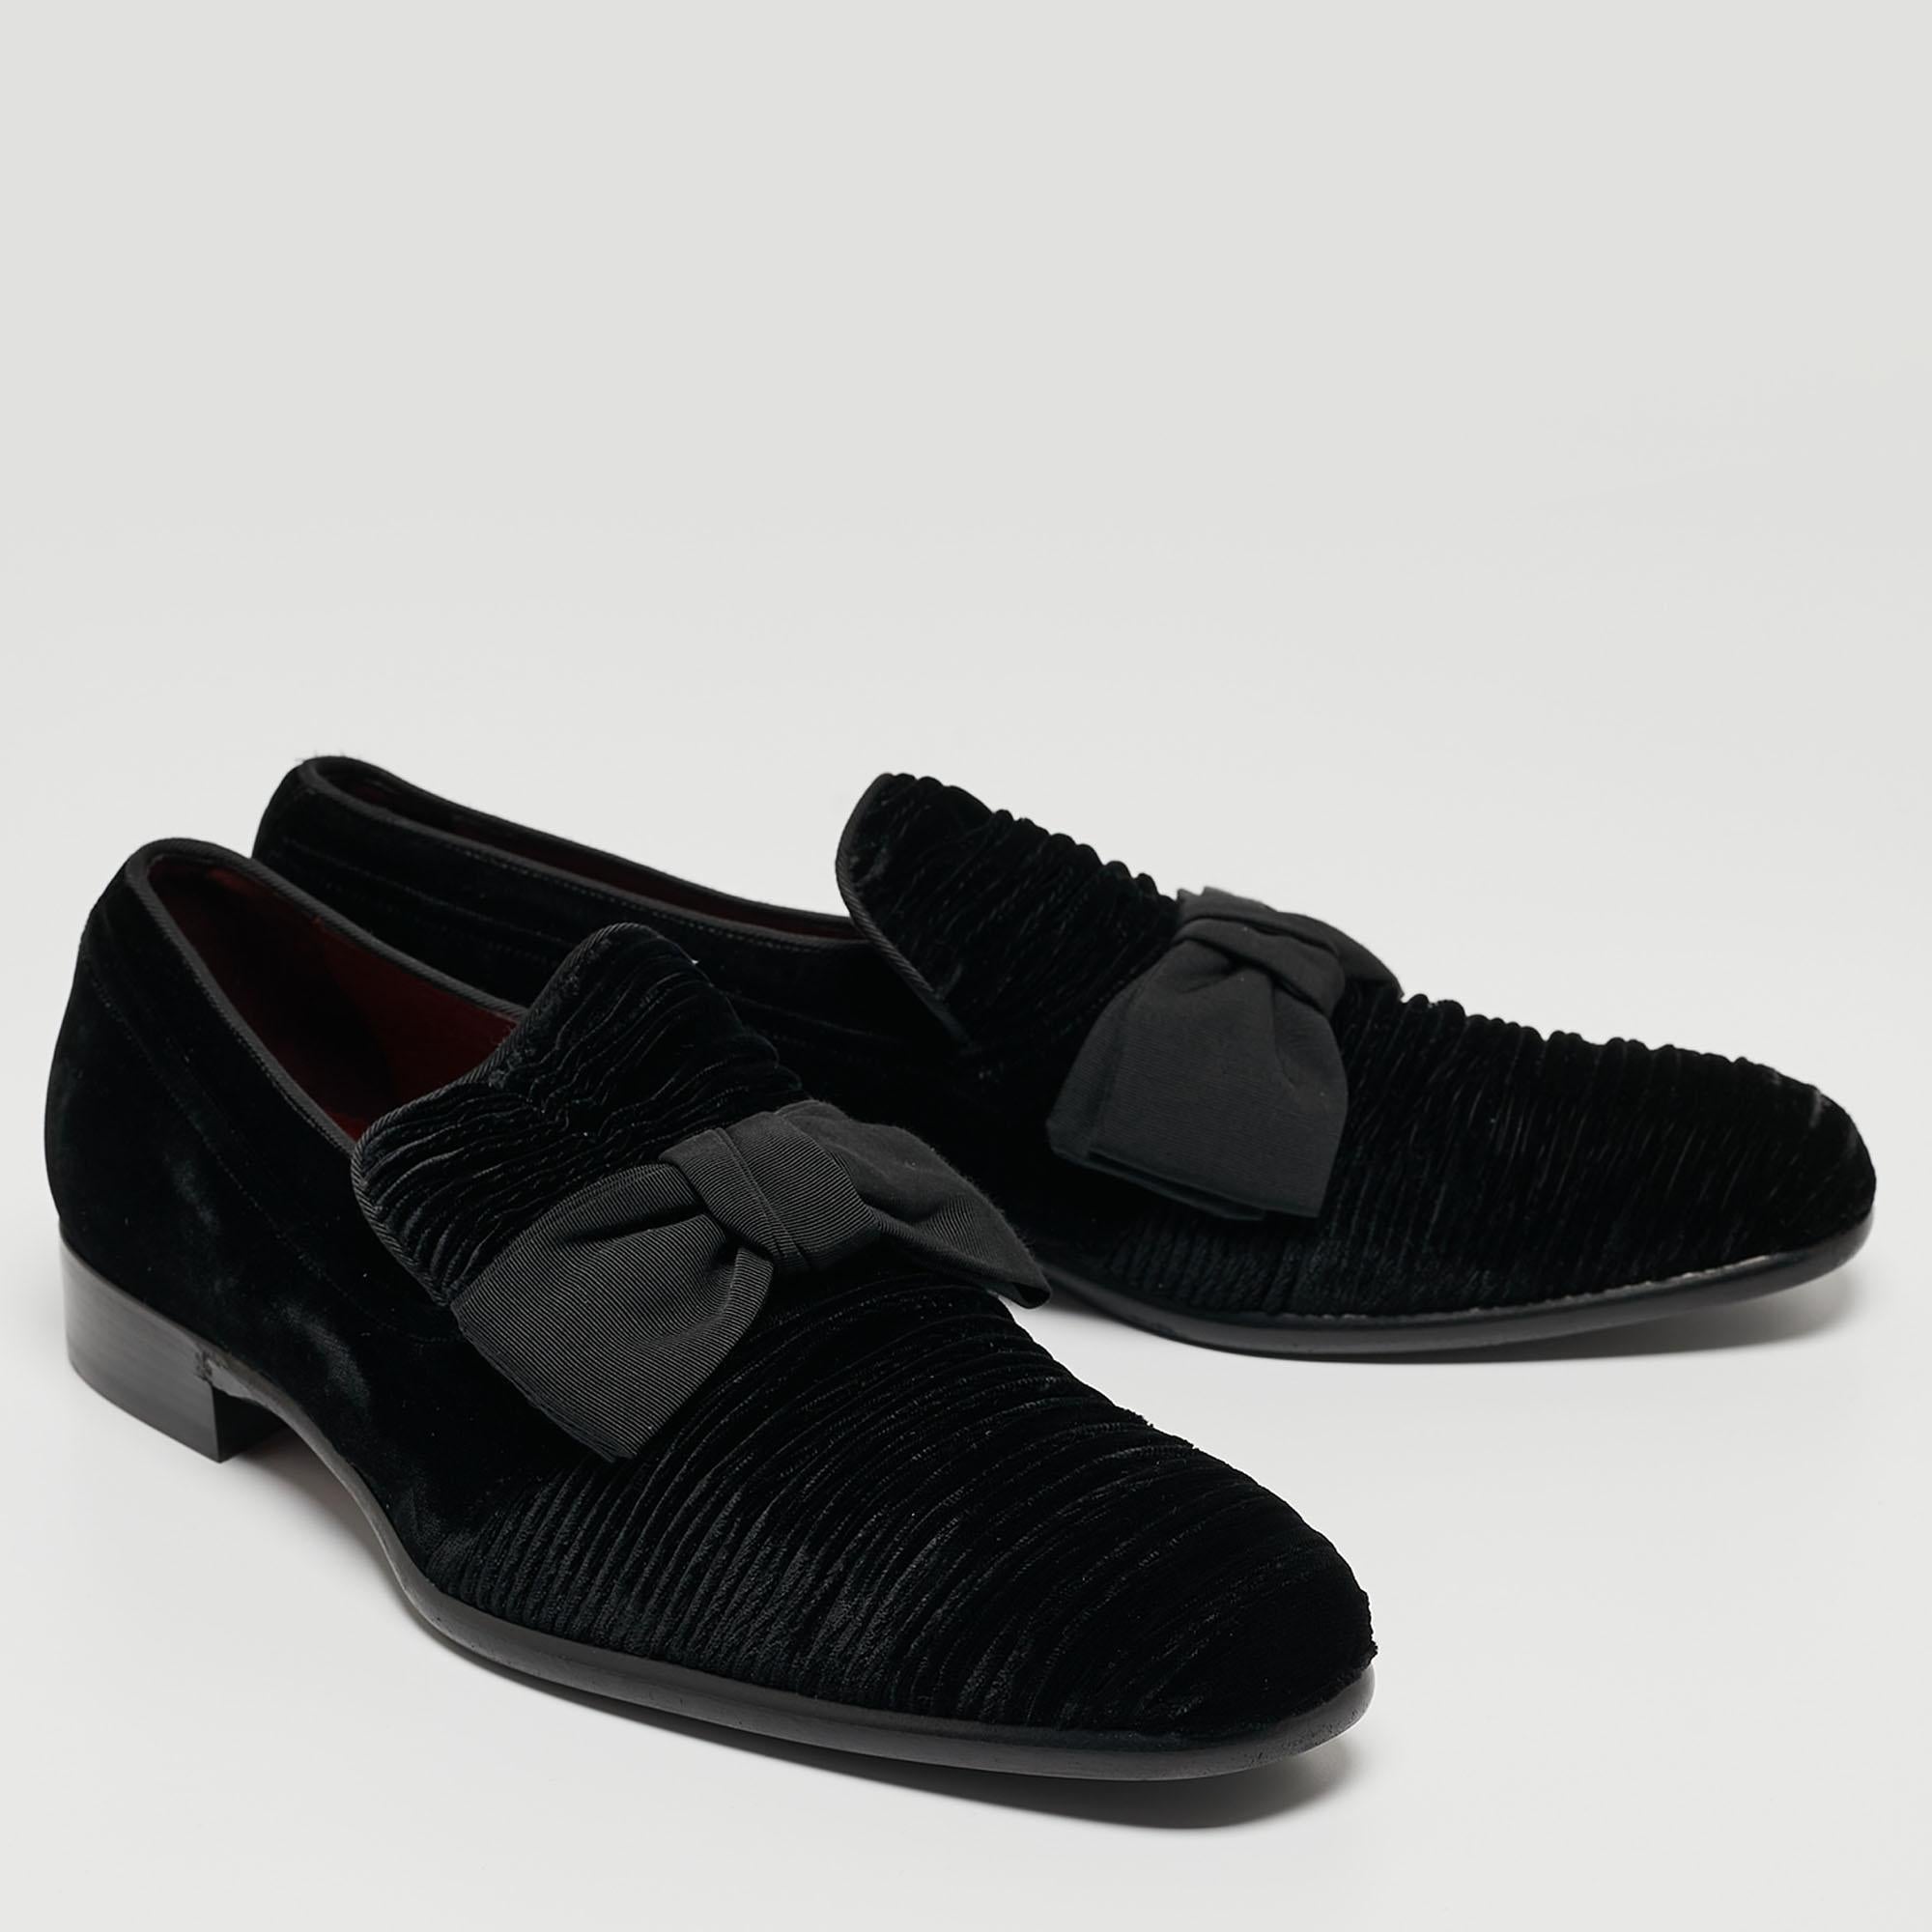 Dolce & Gabbana Black Velvet Bow Loafers Size 44 In Excellent Condition For Sale In Dubai, Al Qouz 2